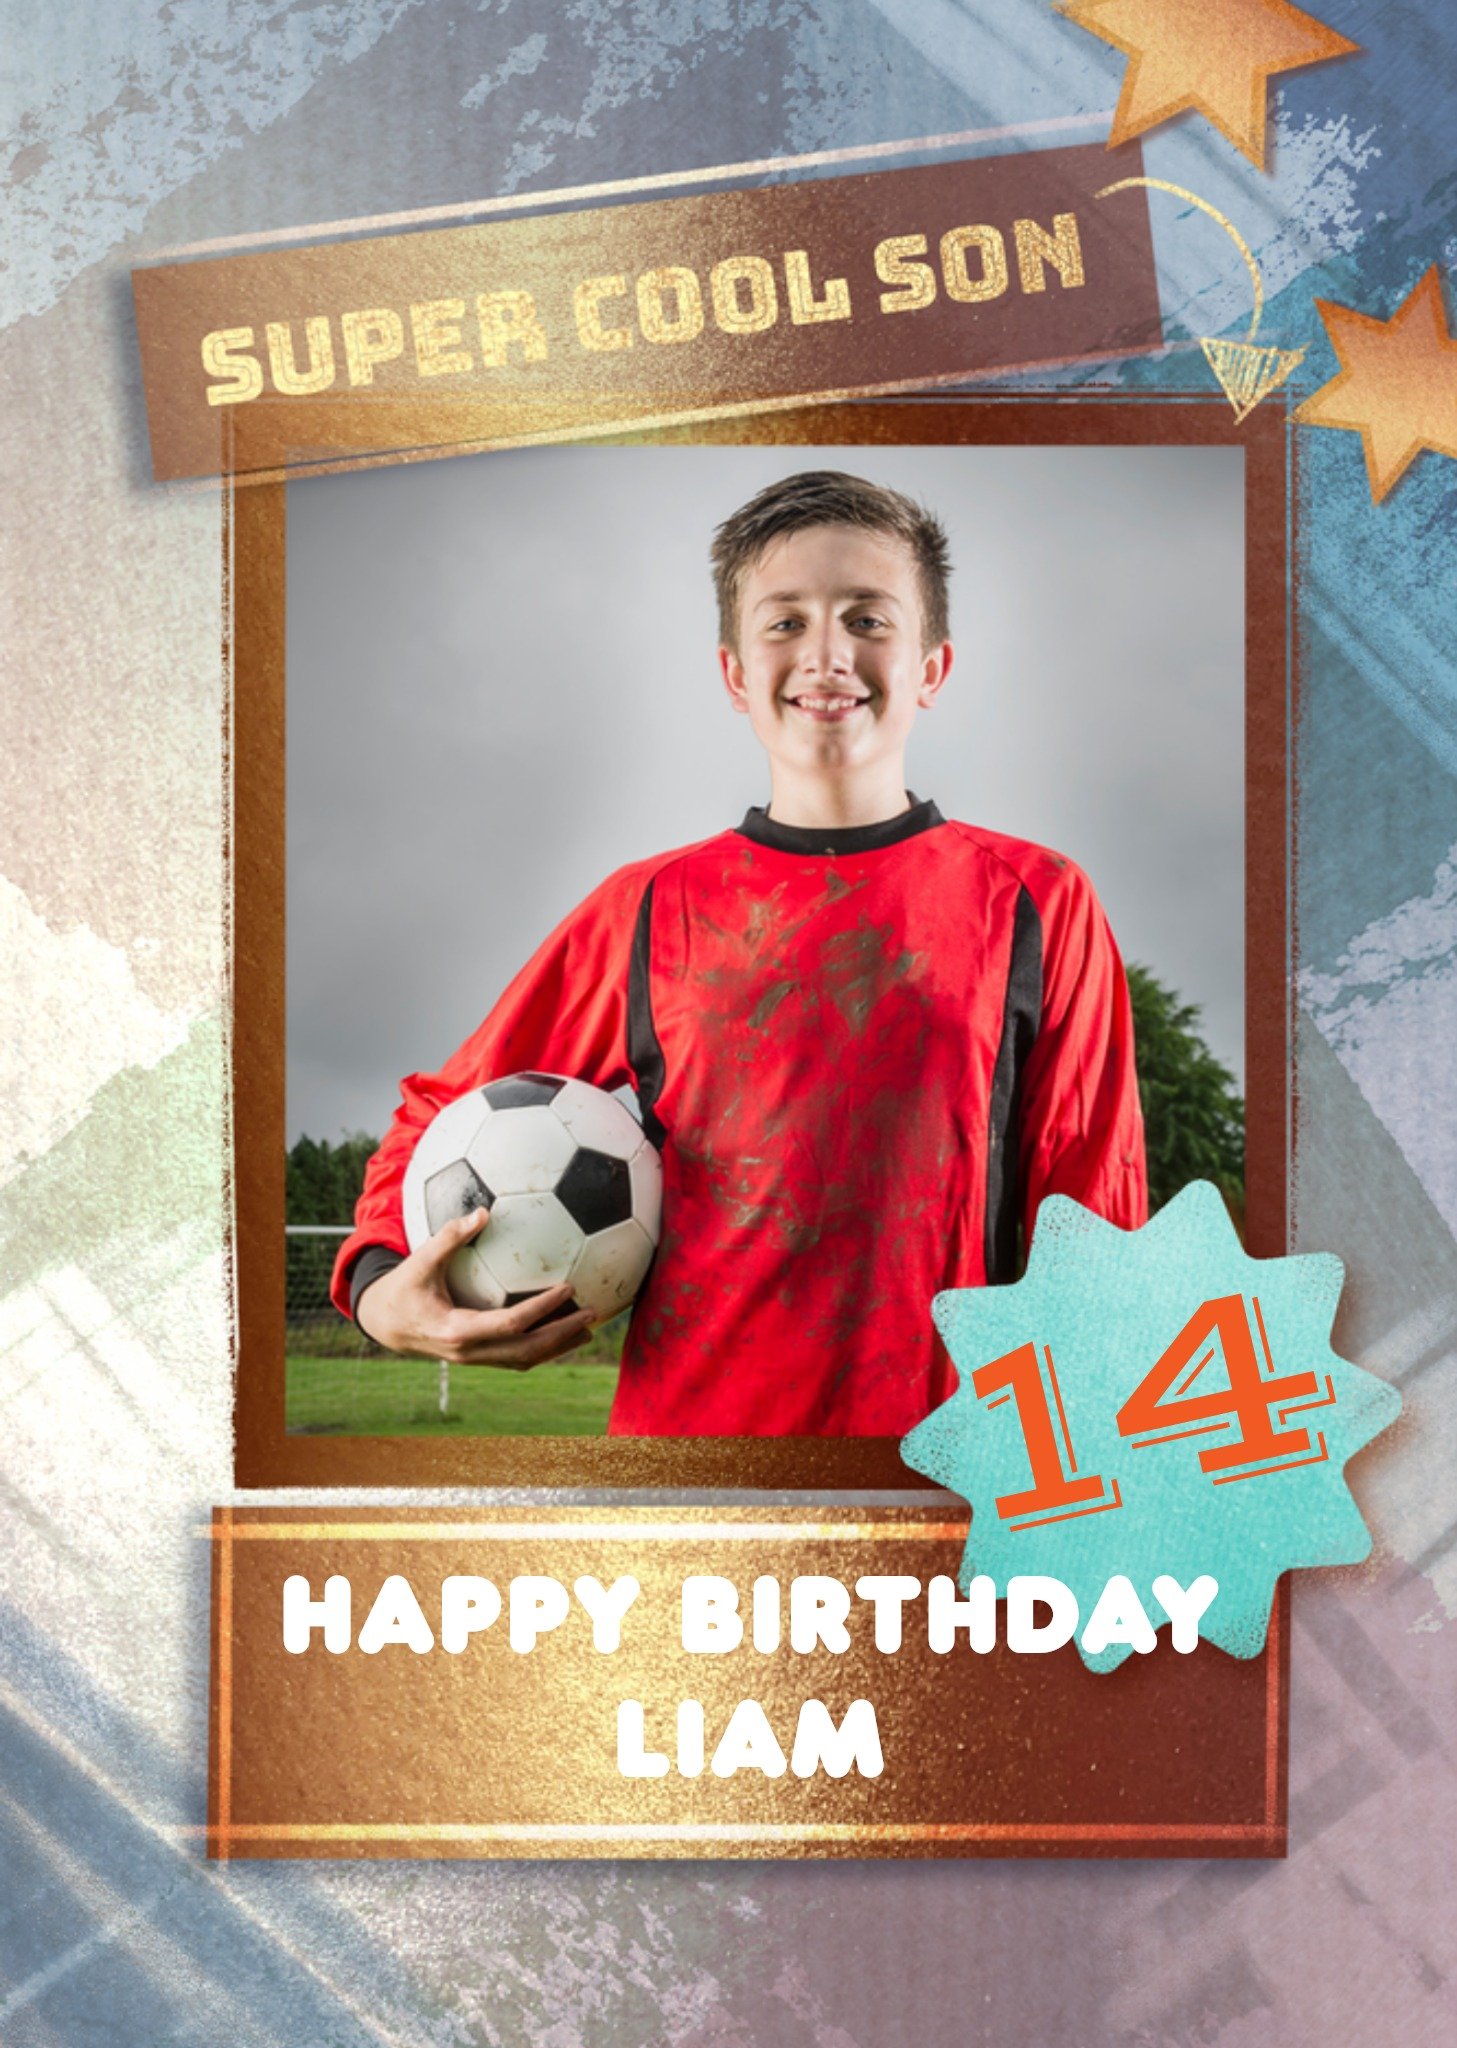 Moonpig Super Cool Son Photo Upload 14th Birthday Card, Large